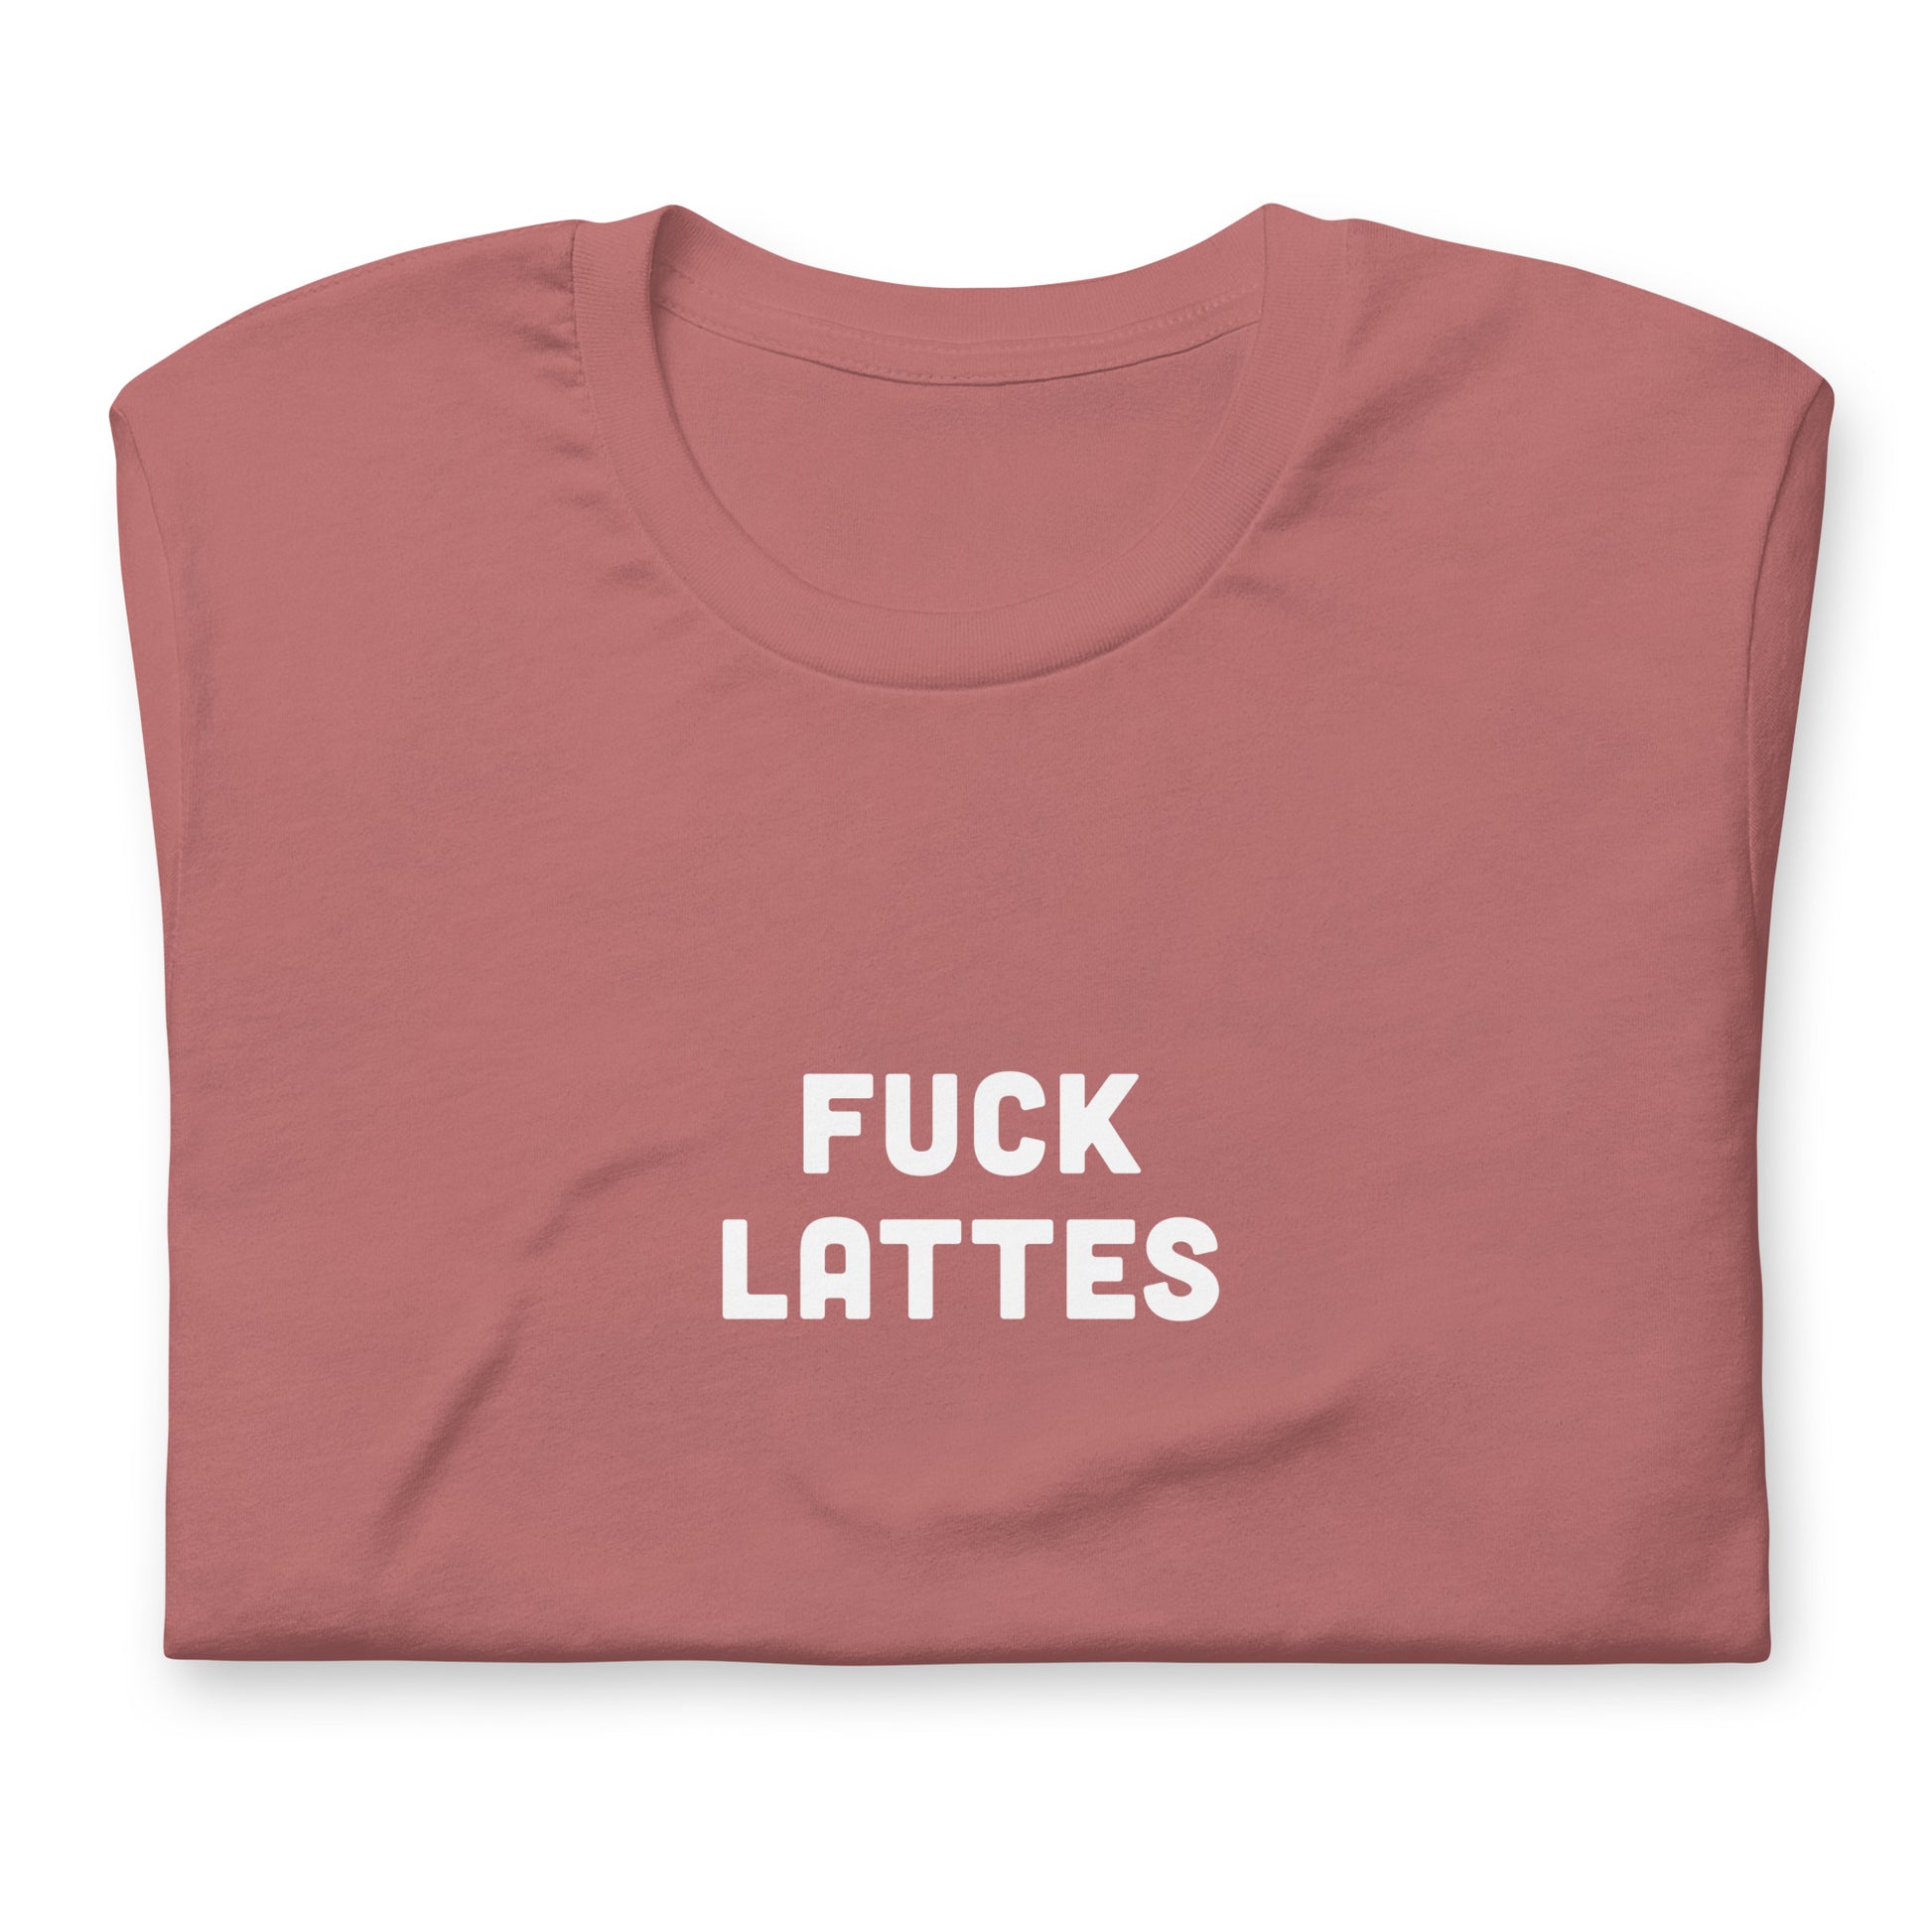 Fuck Lattes T-Shirt Size S Color Forest